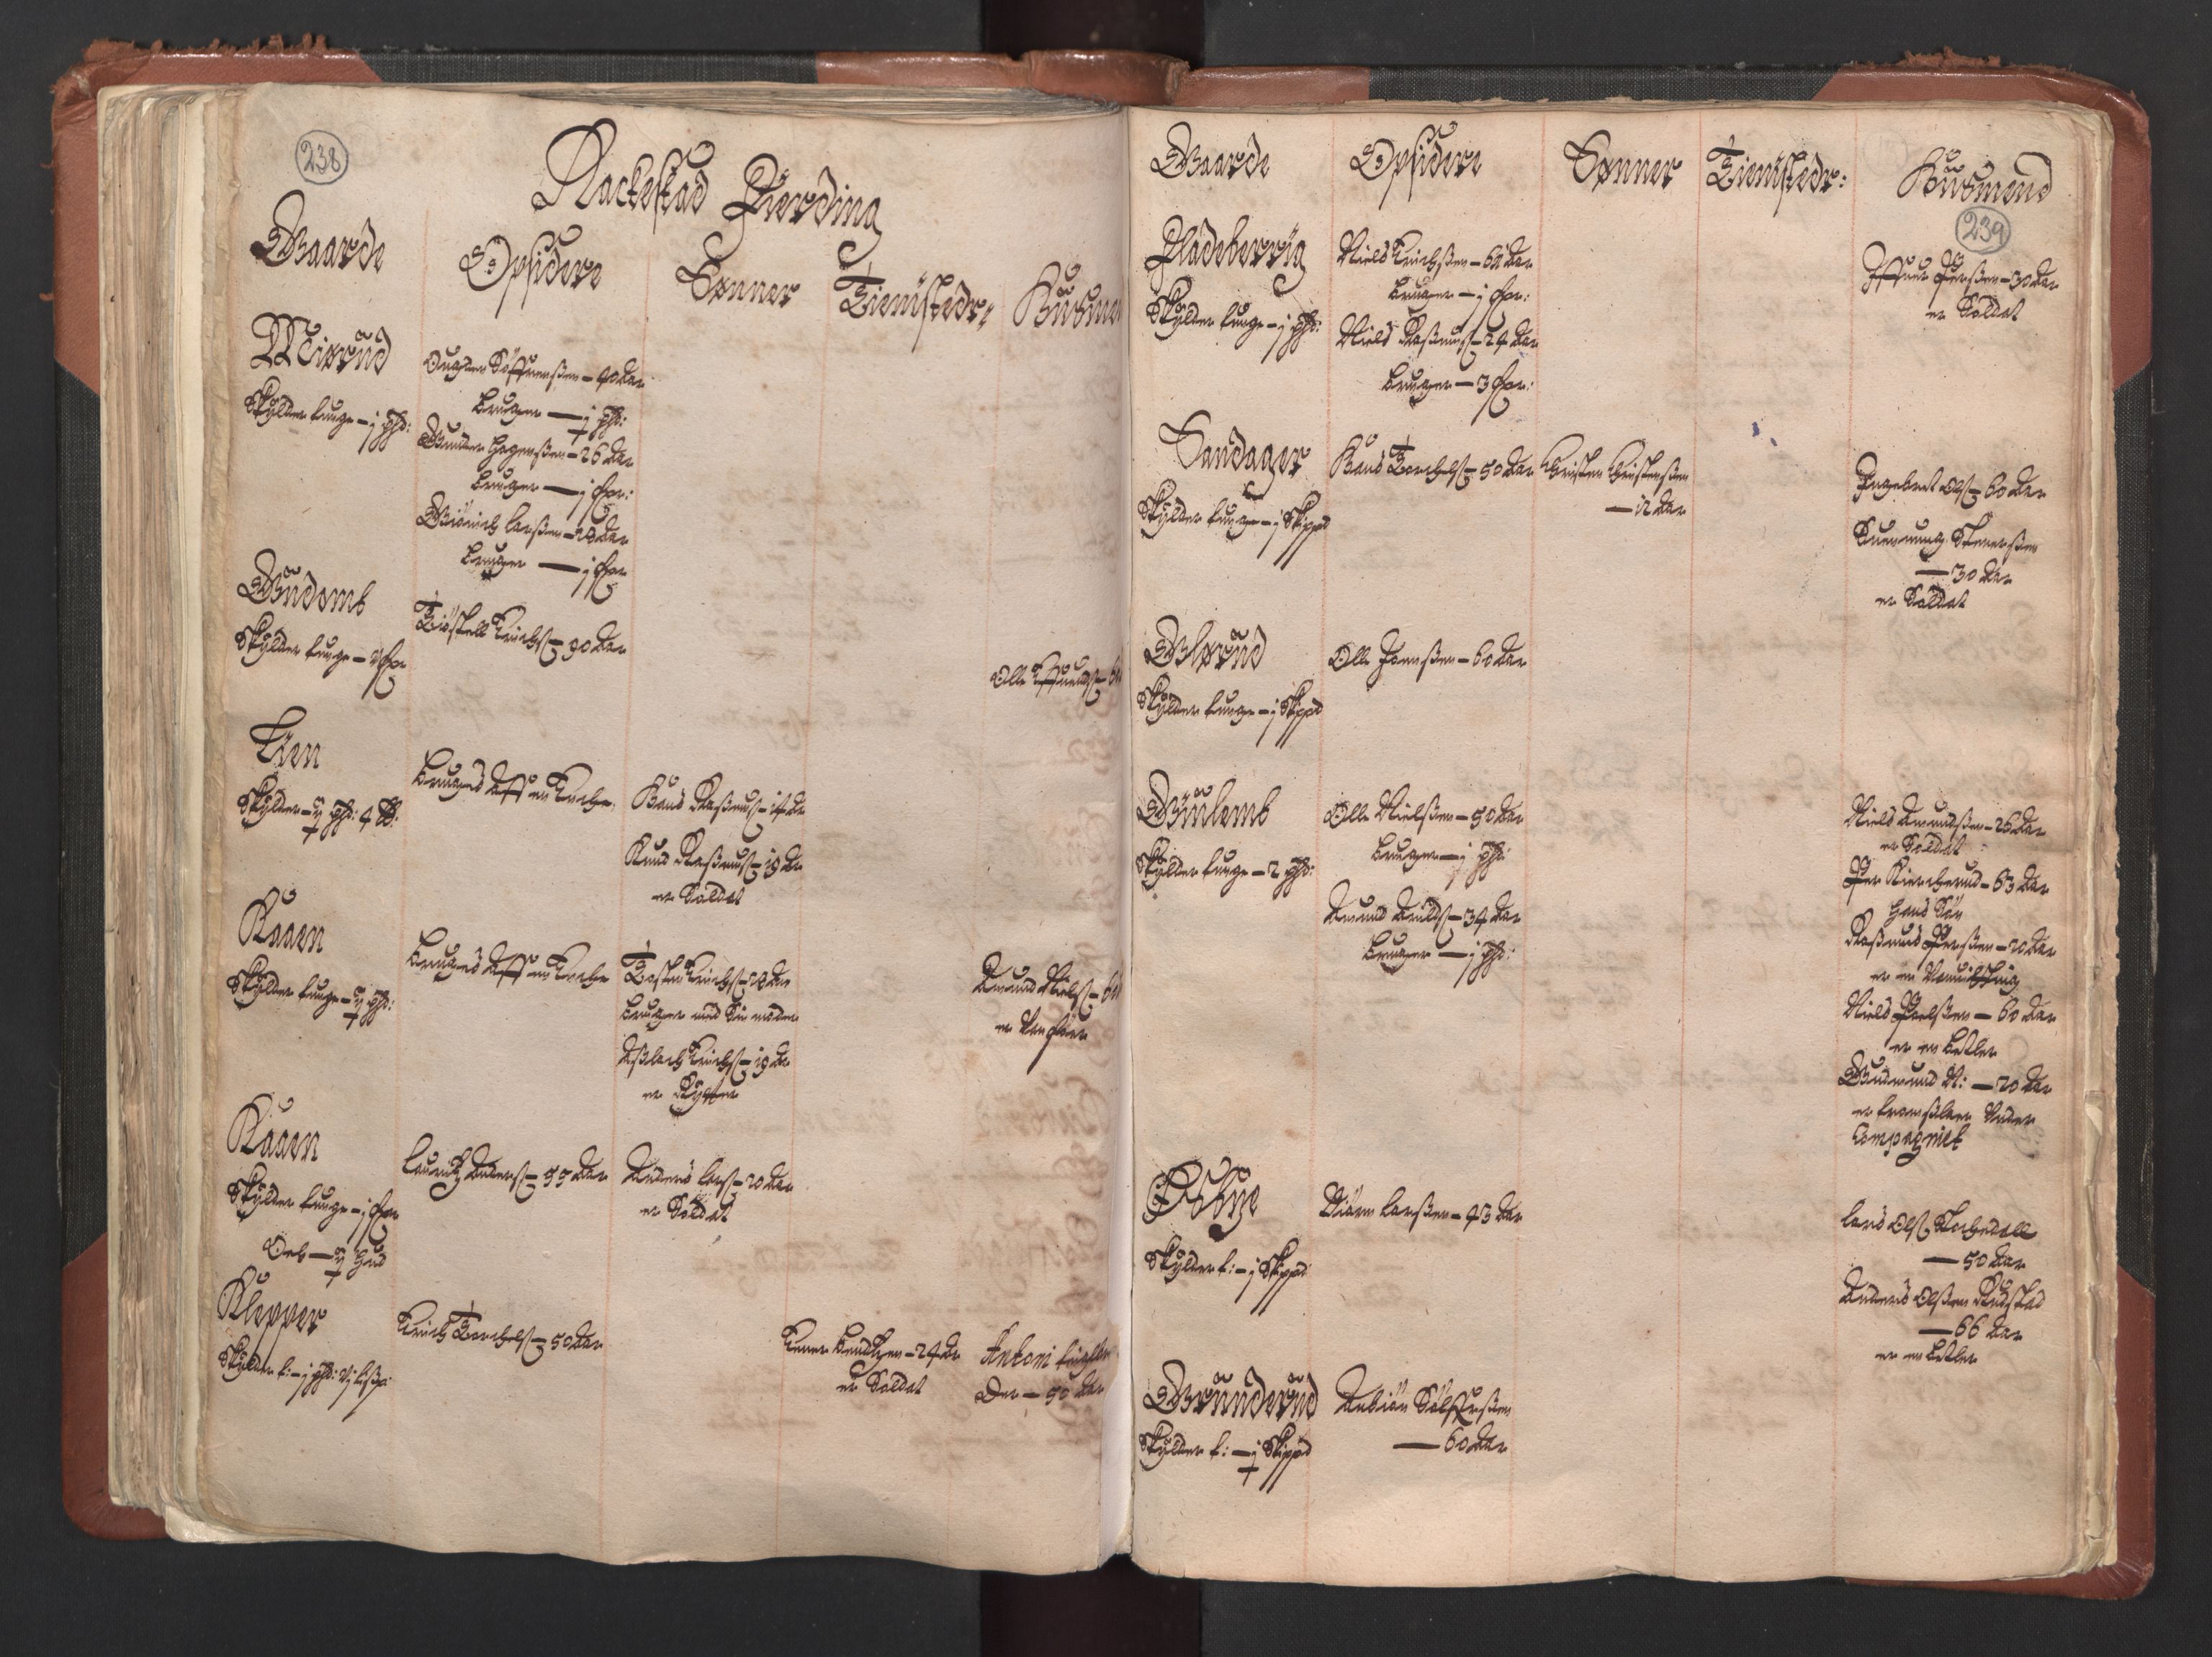 RA, Fogdenes og sorenskrivernes manntall 1664-1666, nr. 1: Fogderier (len og skipreider) i nåværende Østfold fylke, 1664, s. 238-239